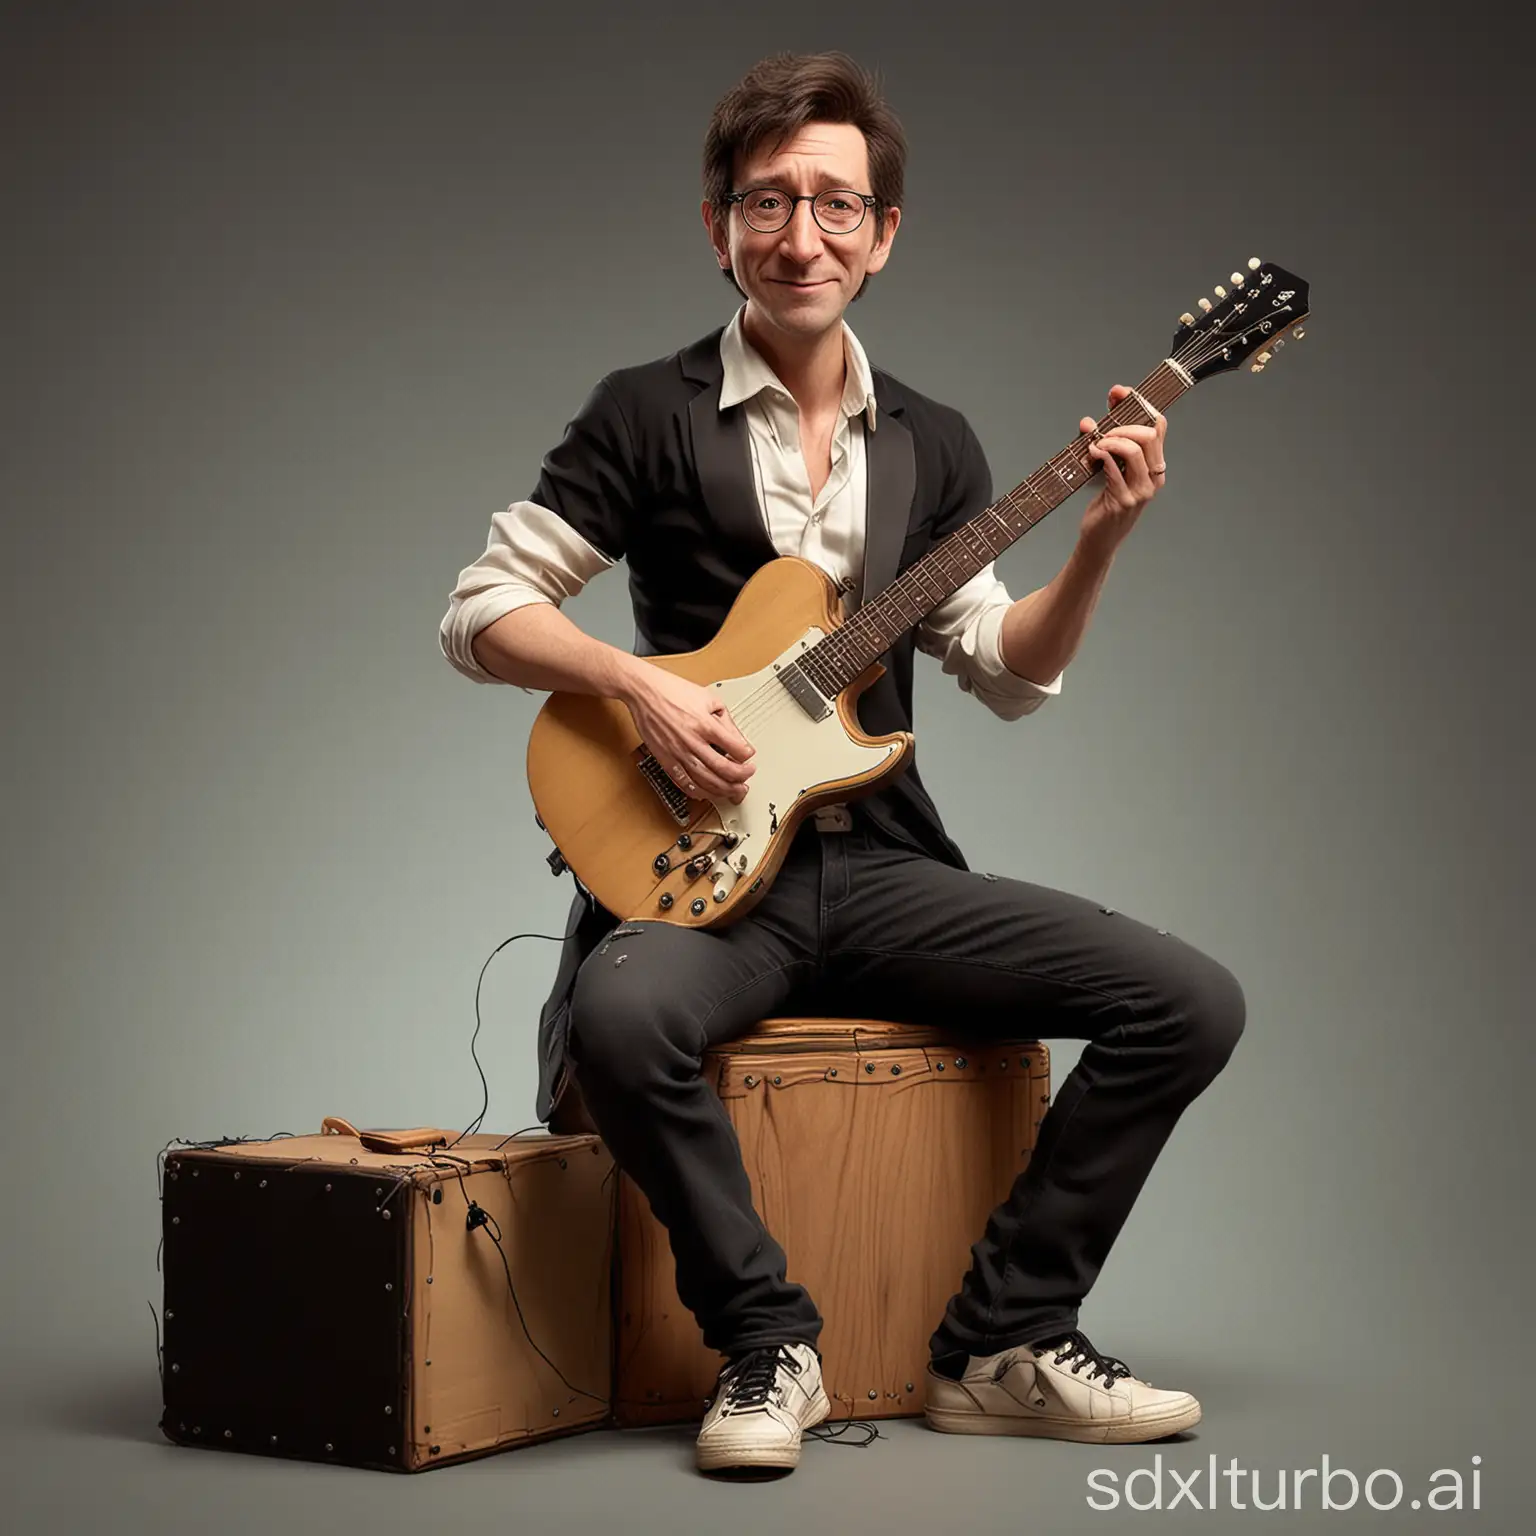 Jhon-Lennon-Playing-Acoustic-Guitar-on-Cajon-Realistic-3D-Pixar-Caricature